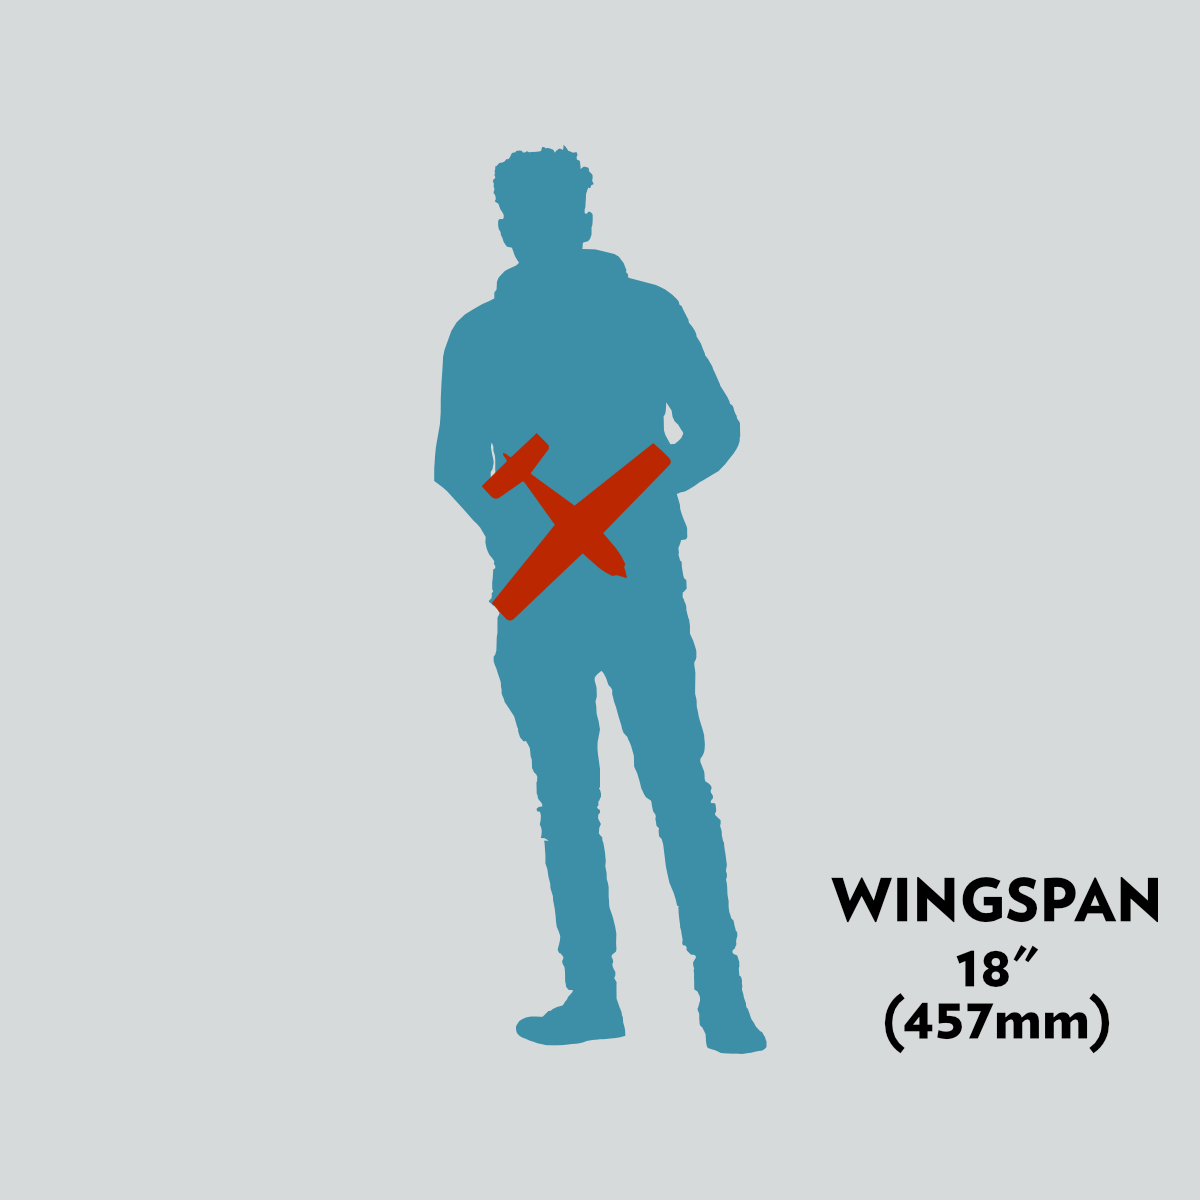 18" (460mm) wingspan